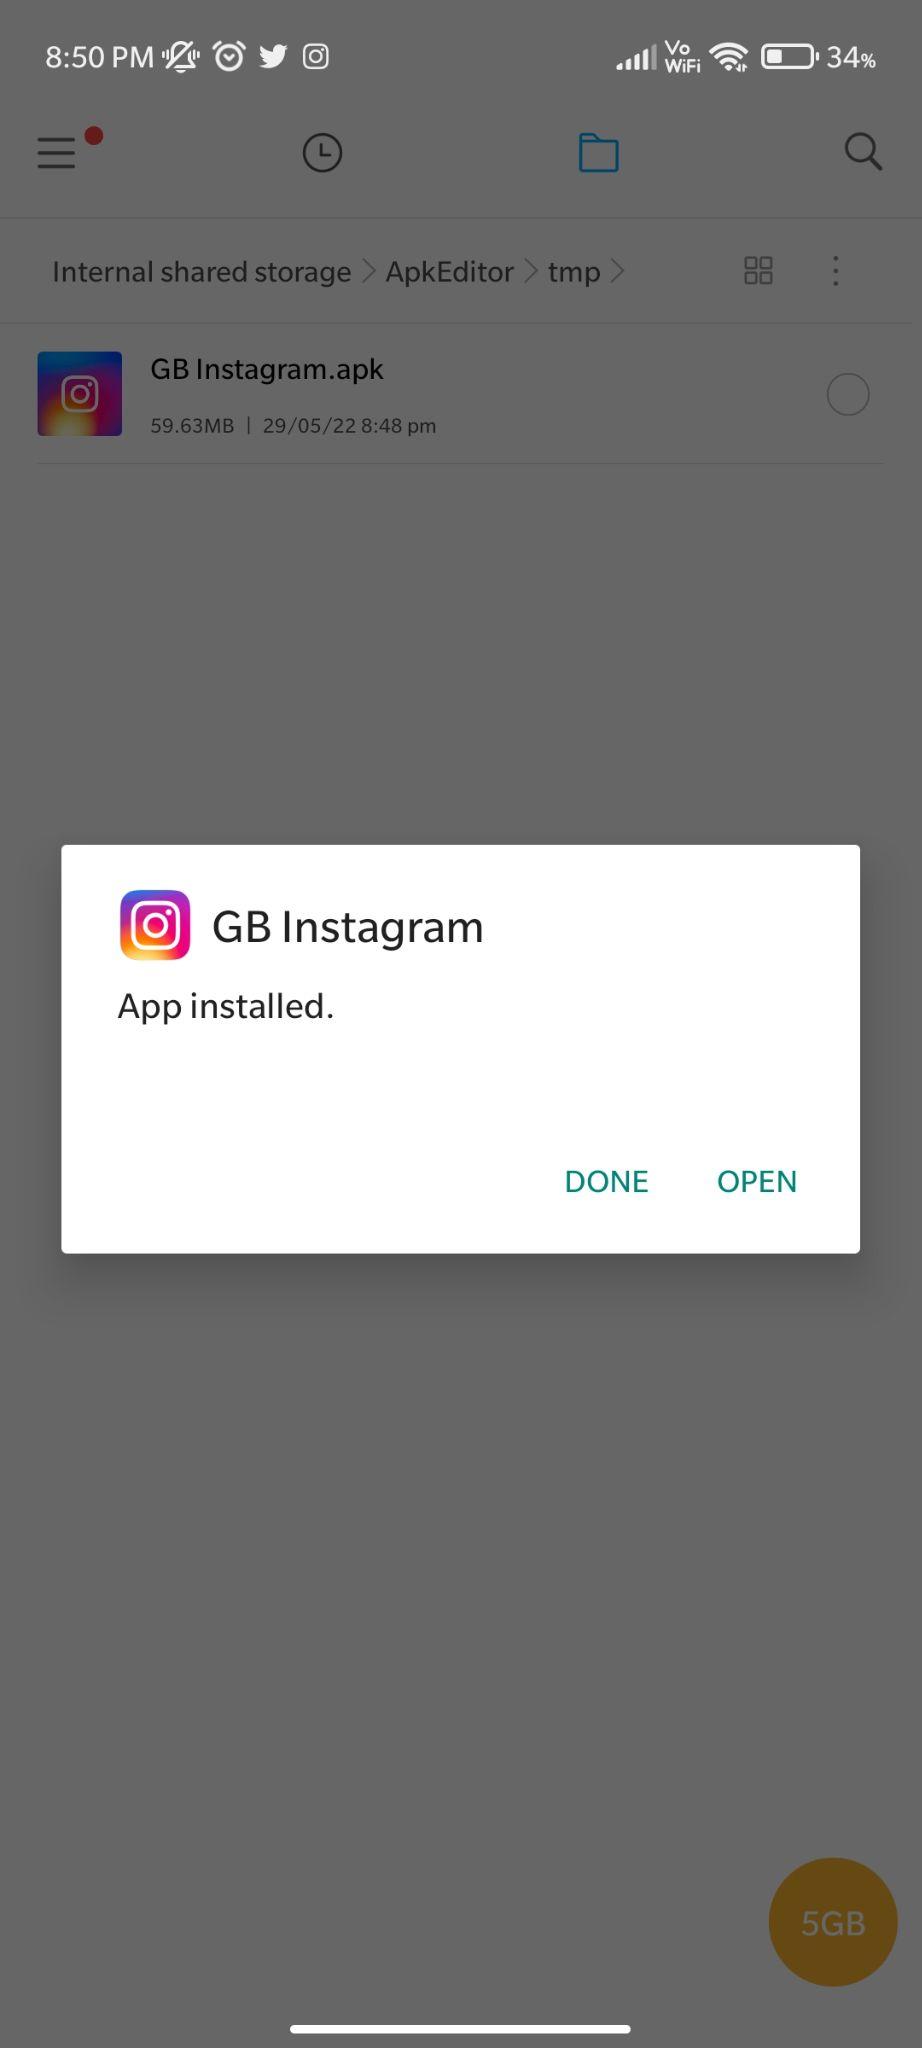 gb instagram apk installed